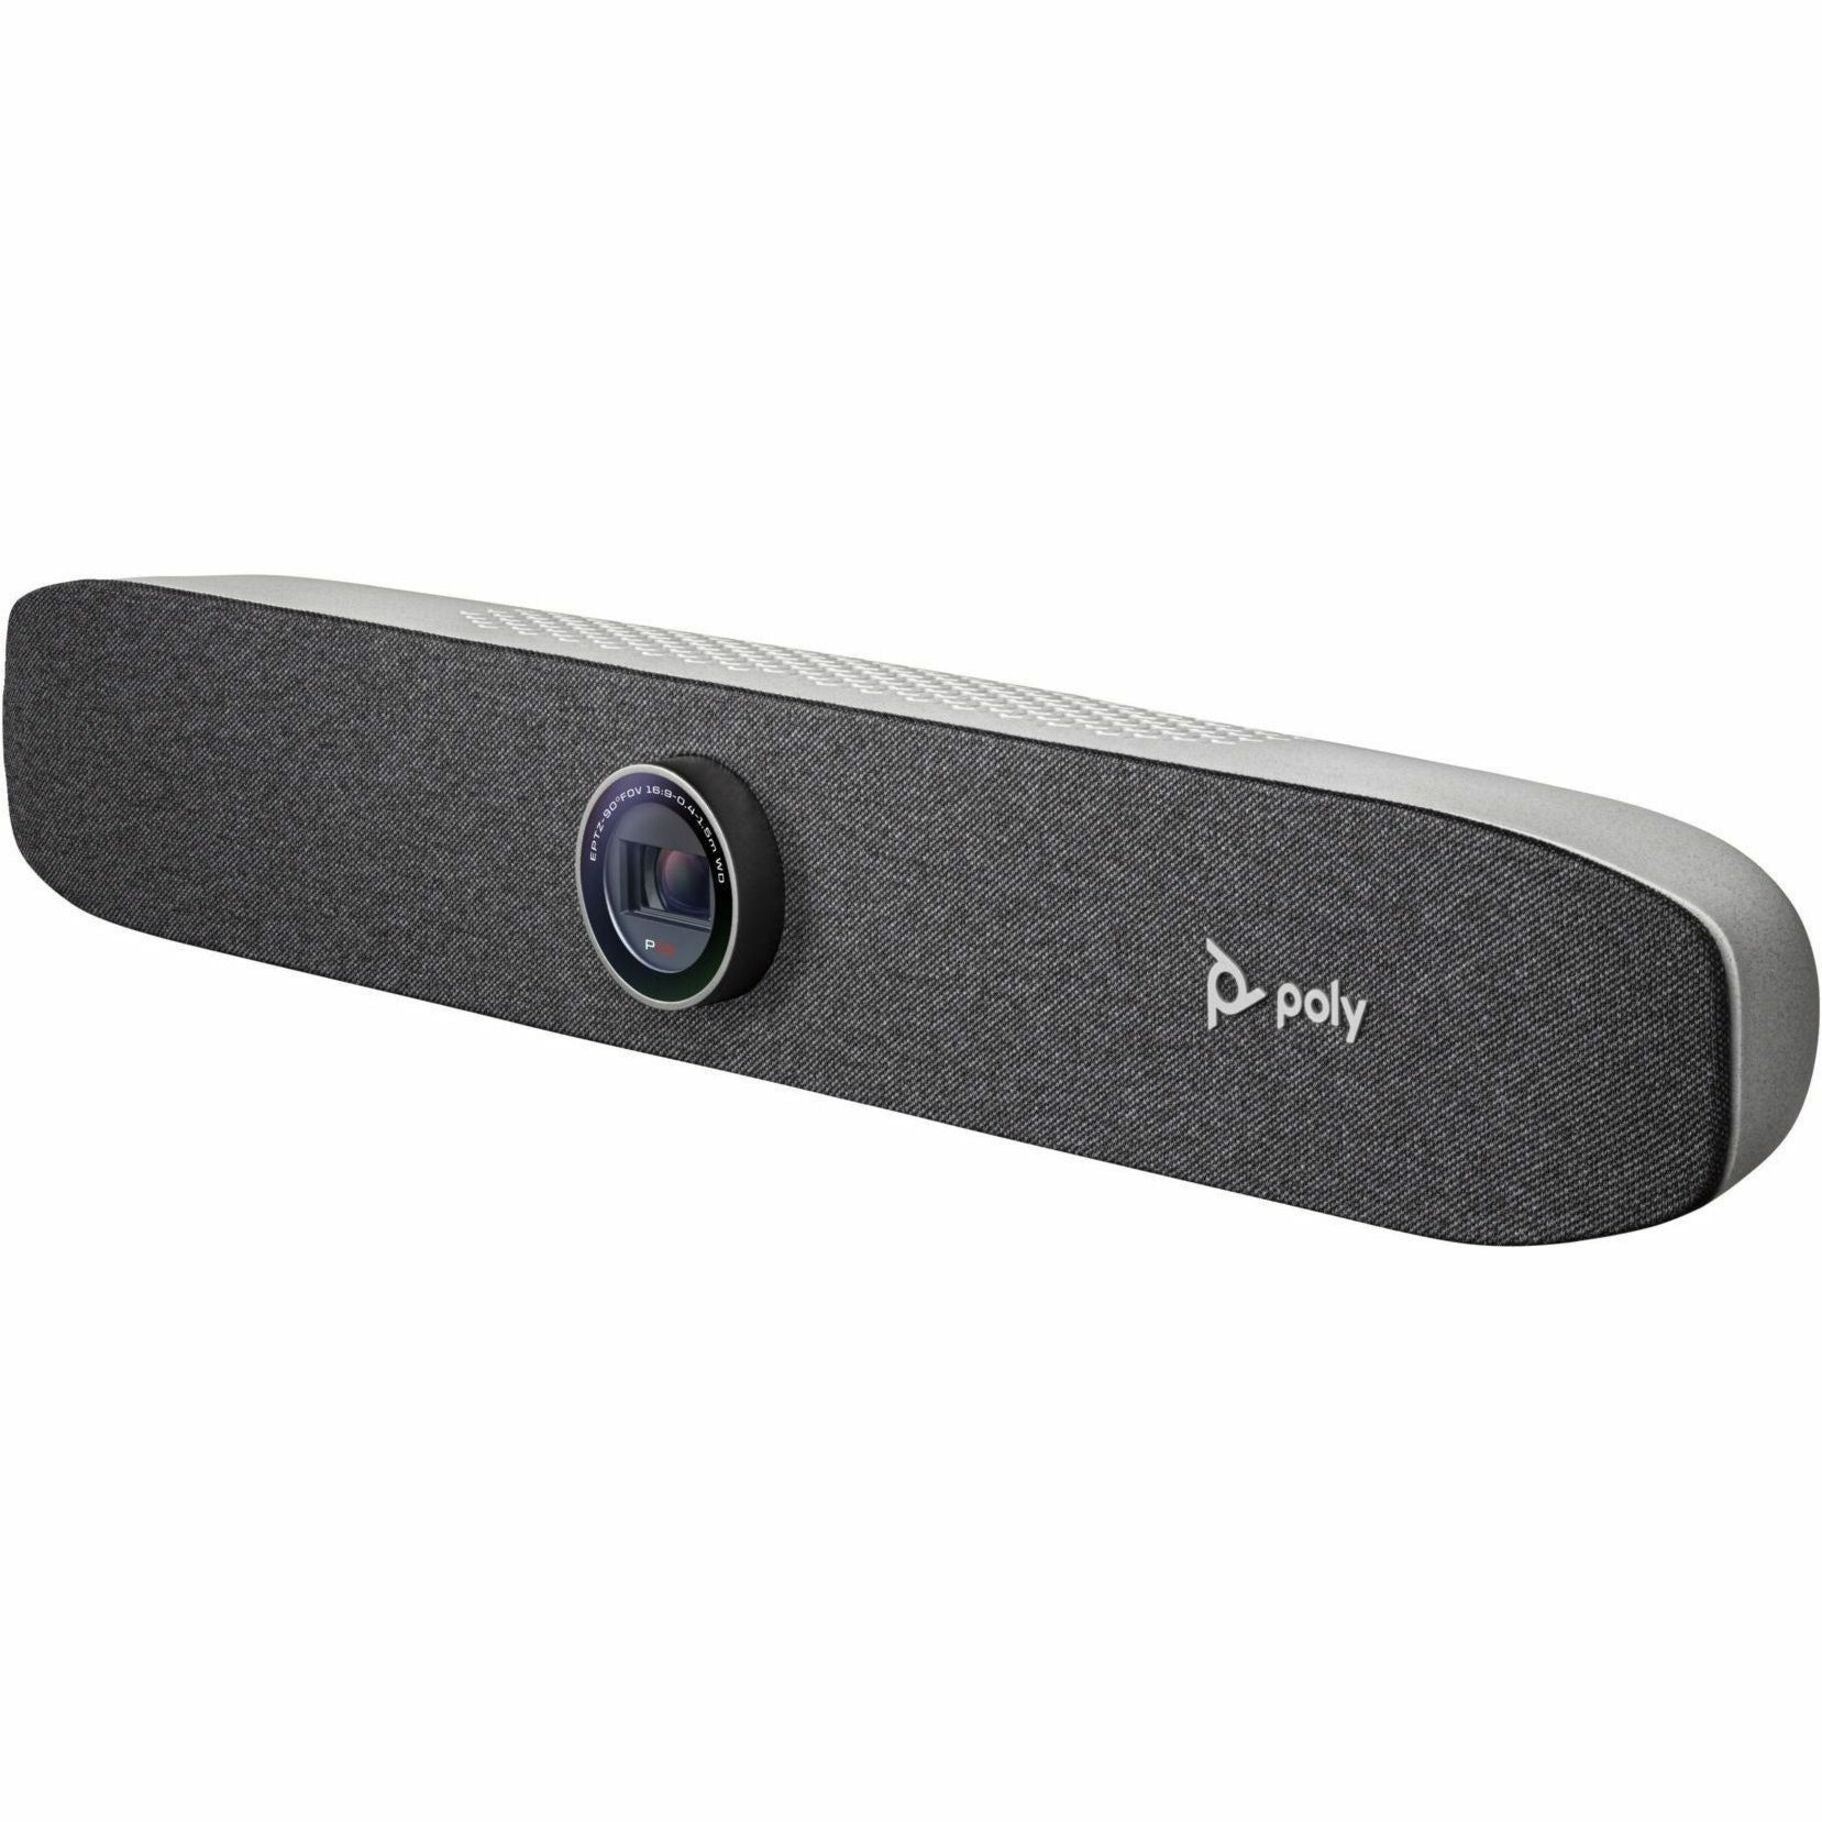 Poly Studio P15 Video Conferencing Camera, Full HD 3840 x 2160